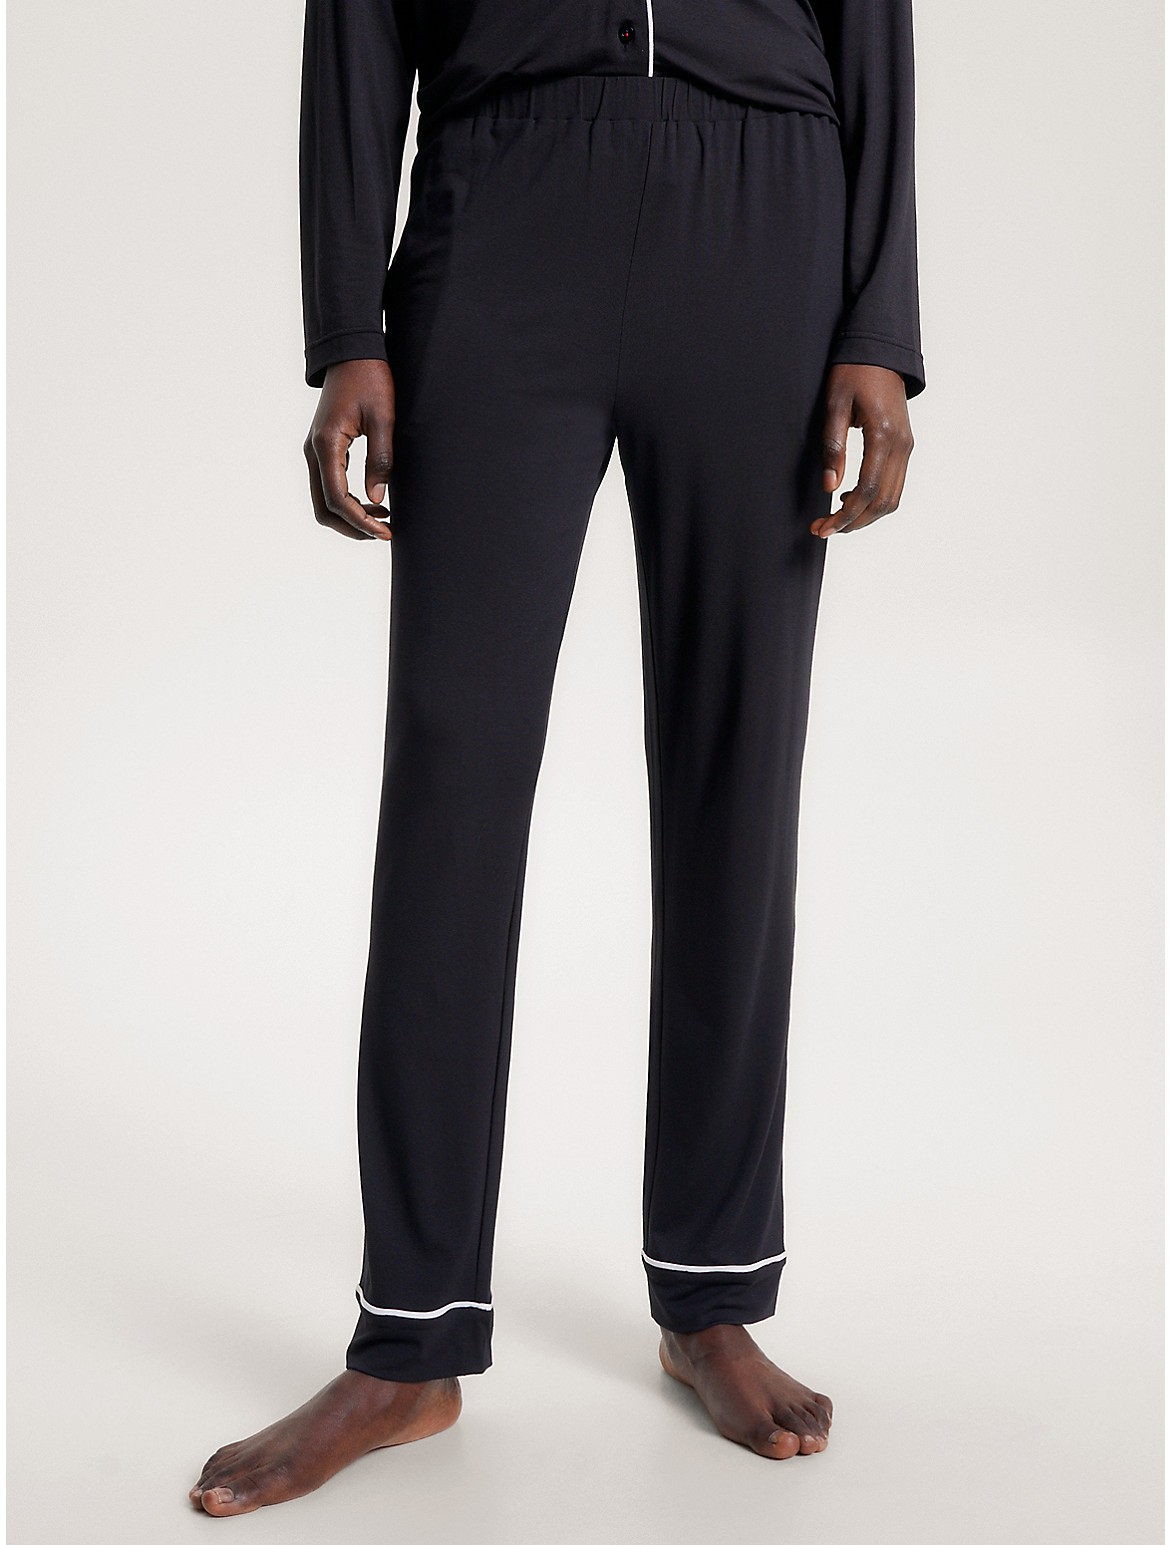 Tommy Hilfiger Women's Piped Trim Pajama Pant - Black - XL